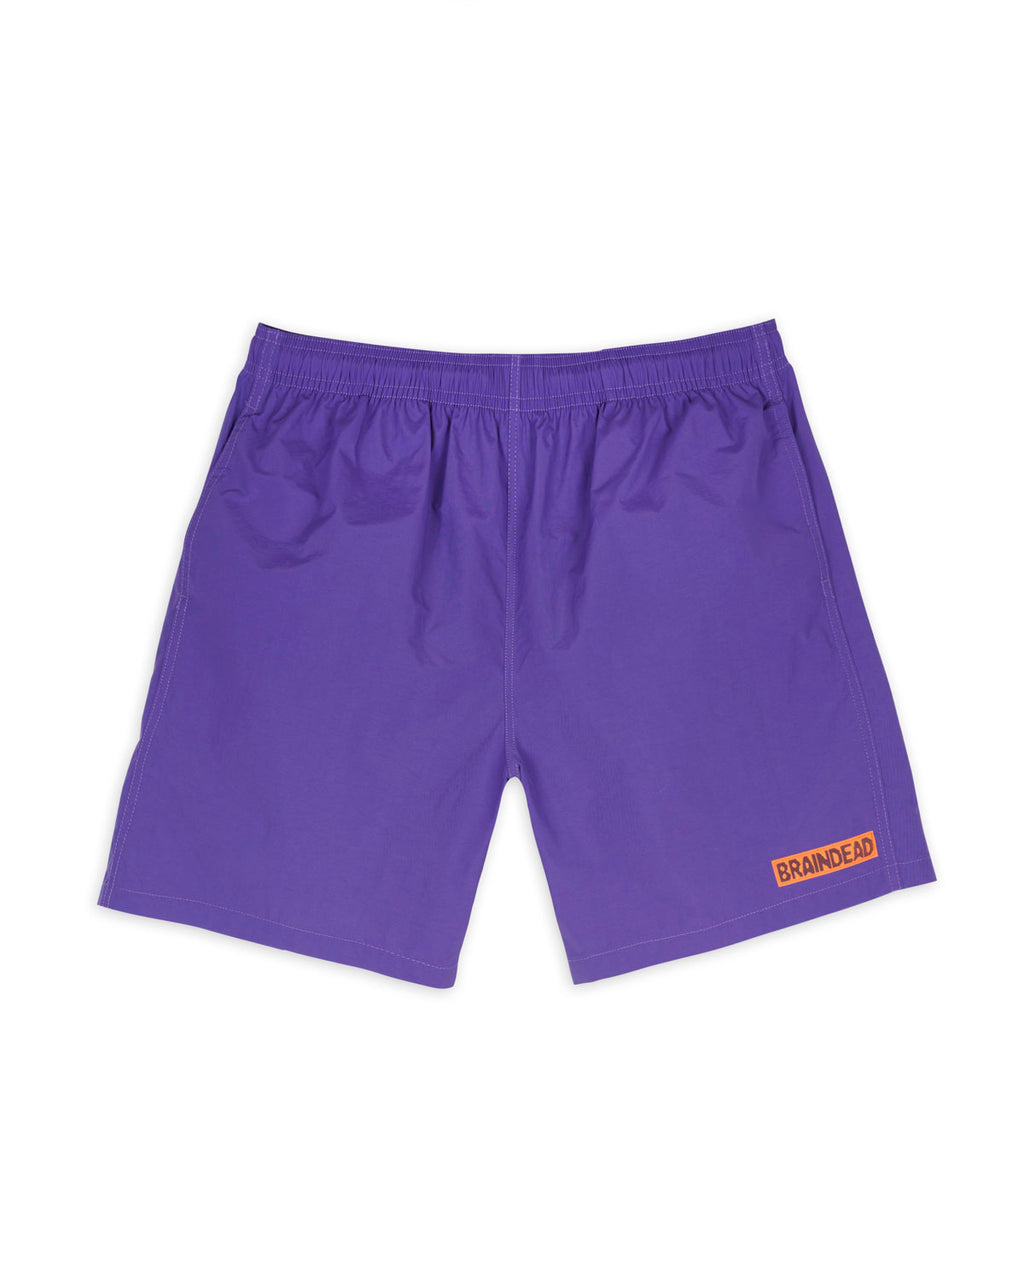 Kickers Short - Purple